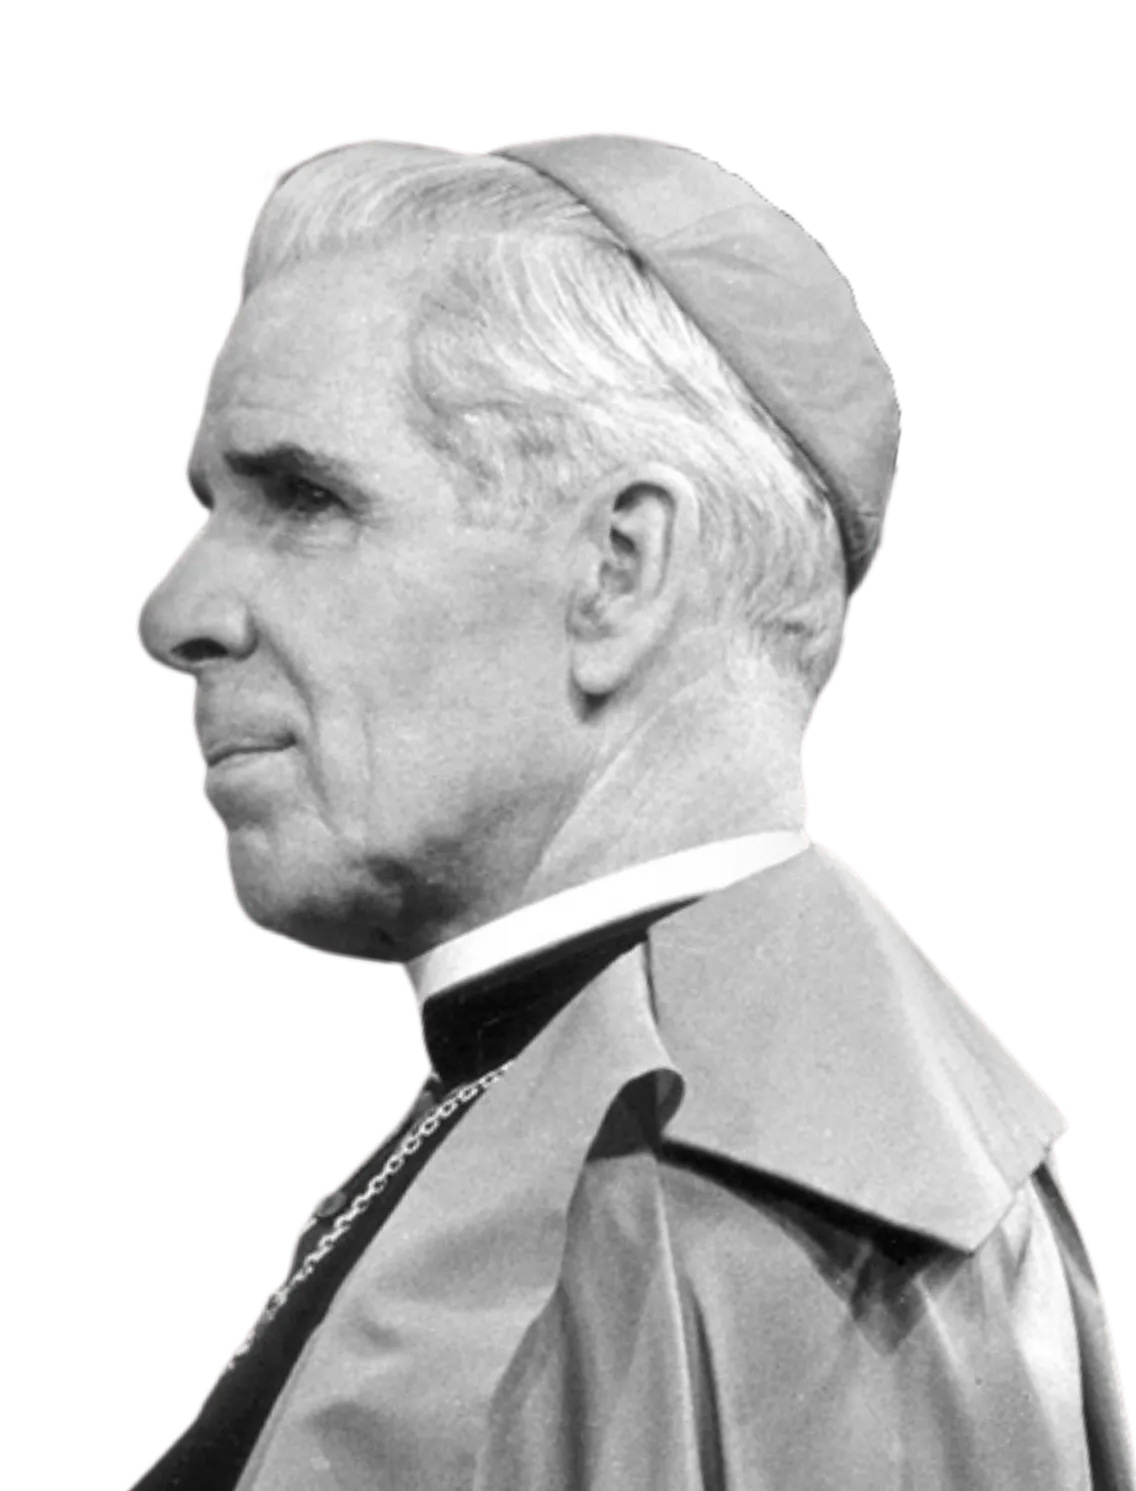 Main headshot of Archbishop Fulton J. Sheen